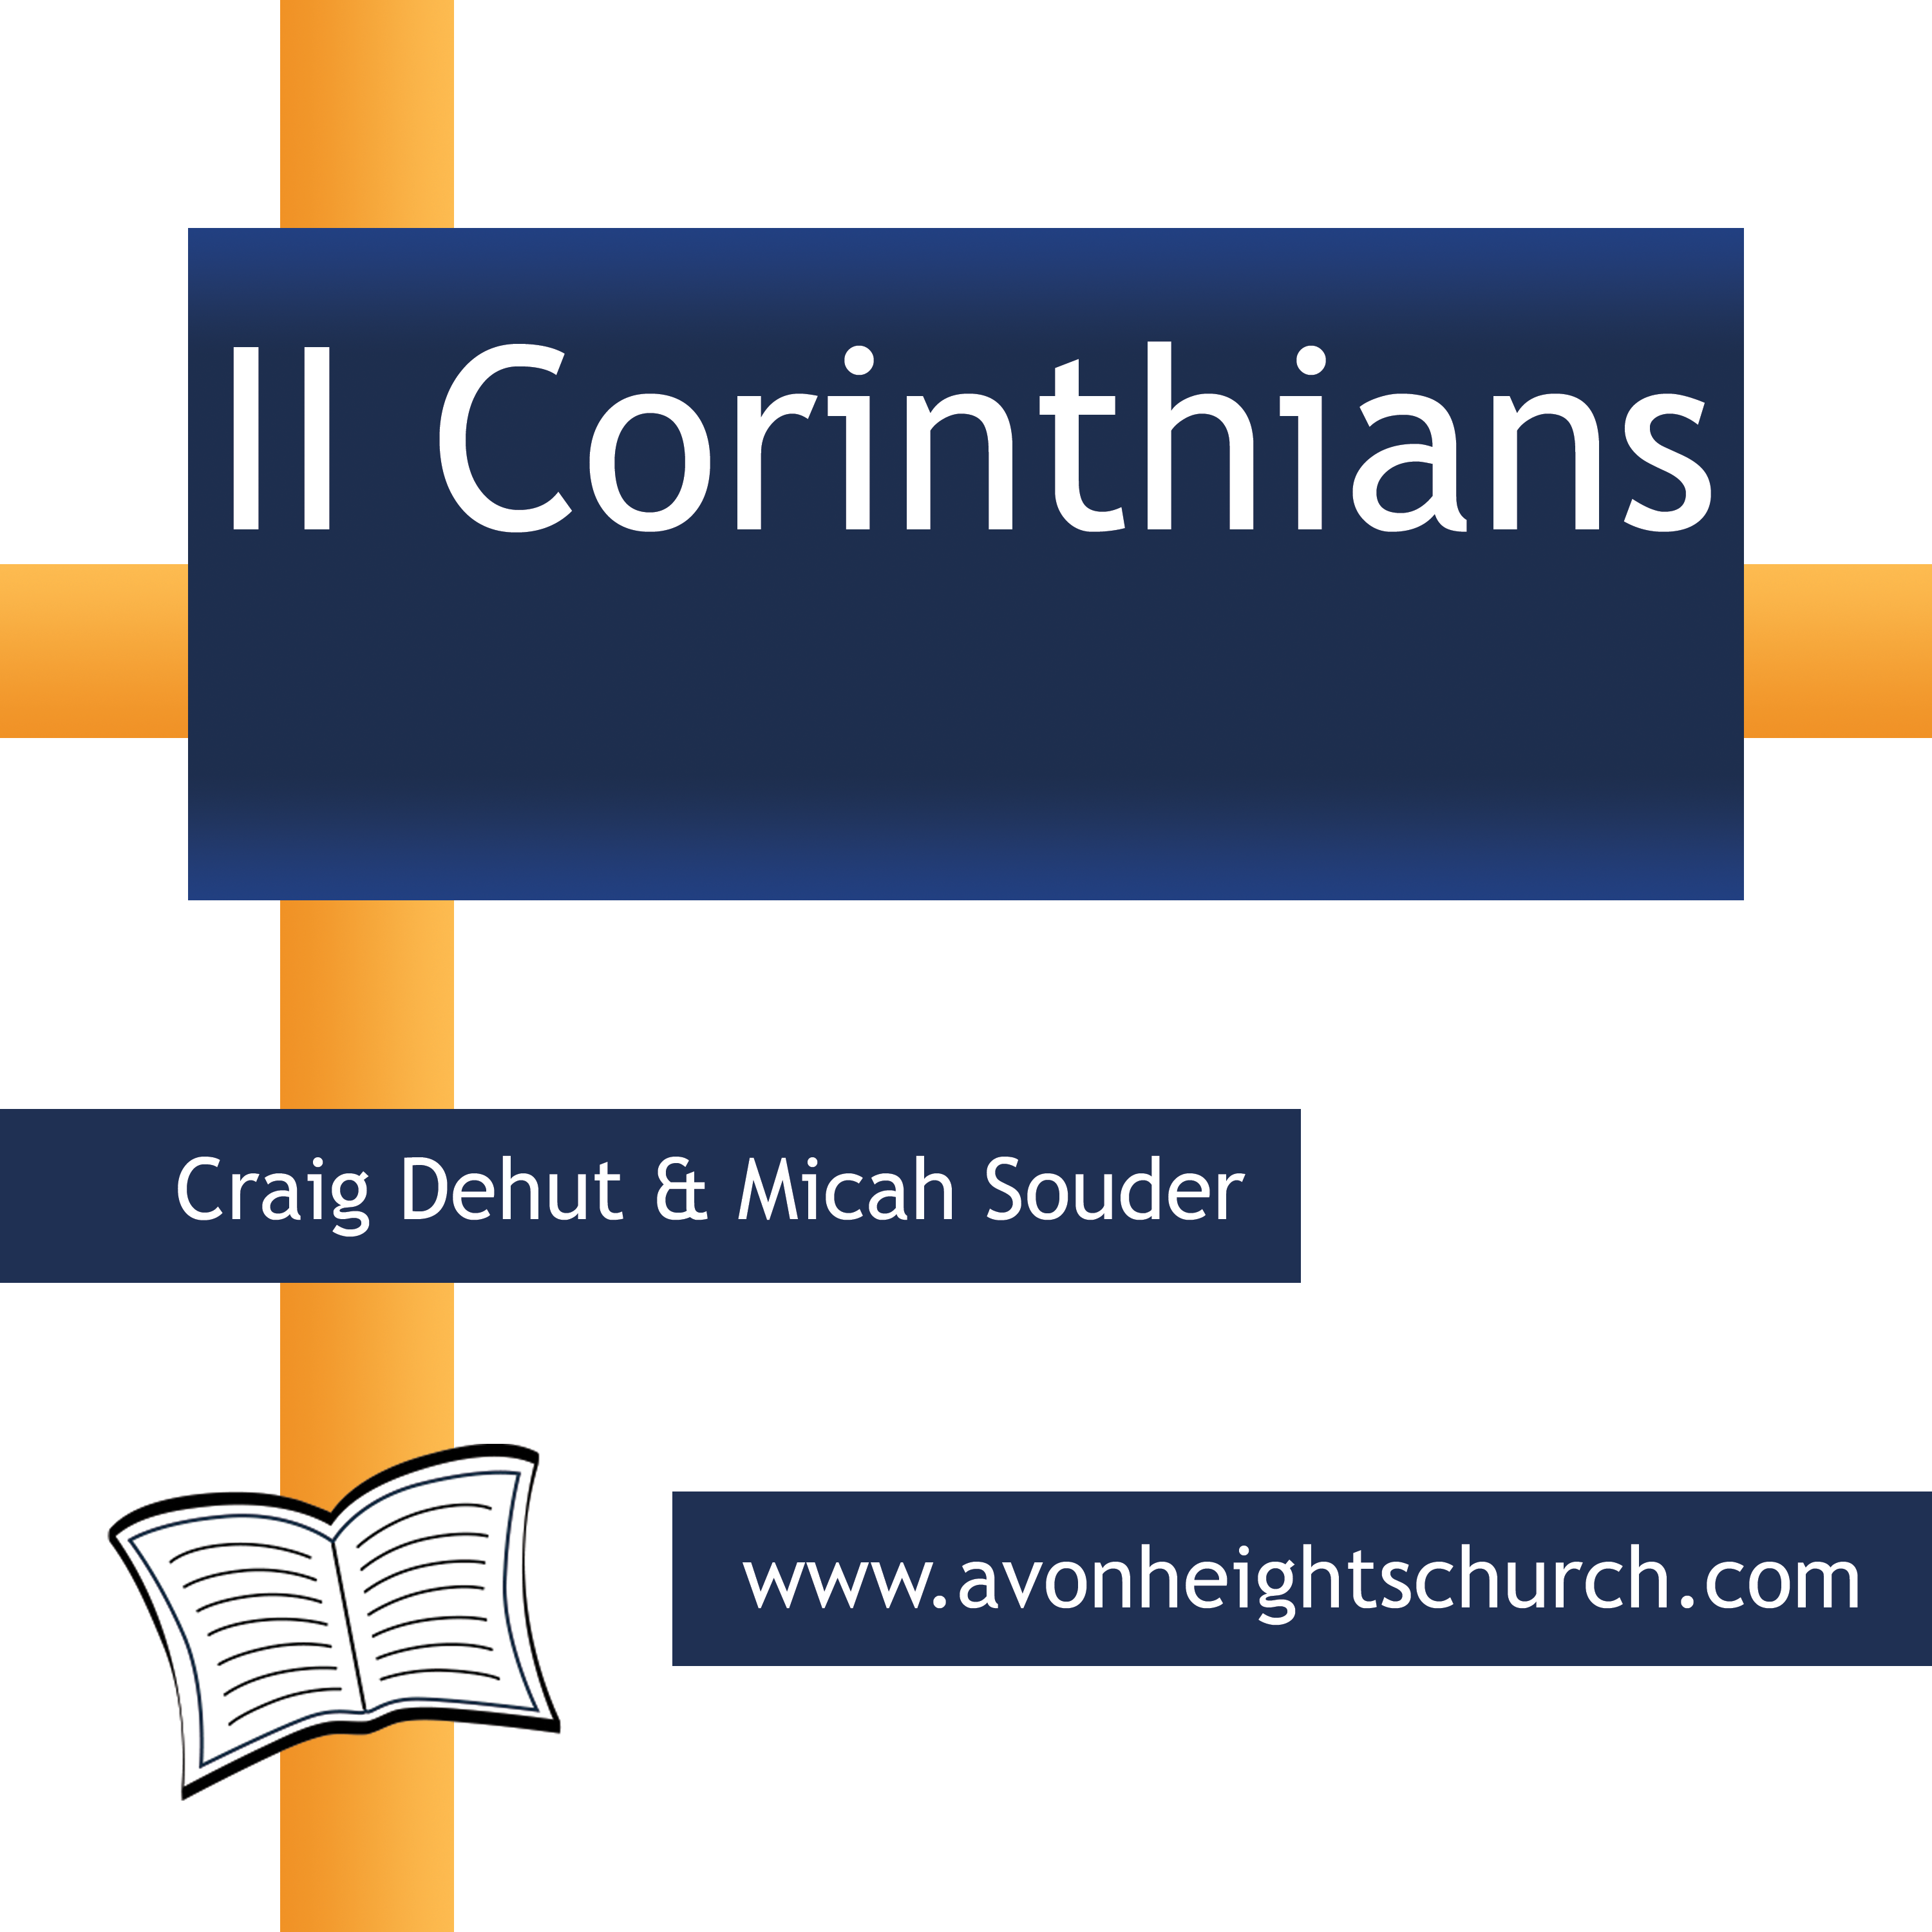 II Corinthians Bible Study